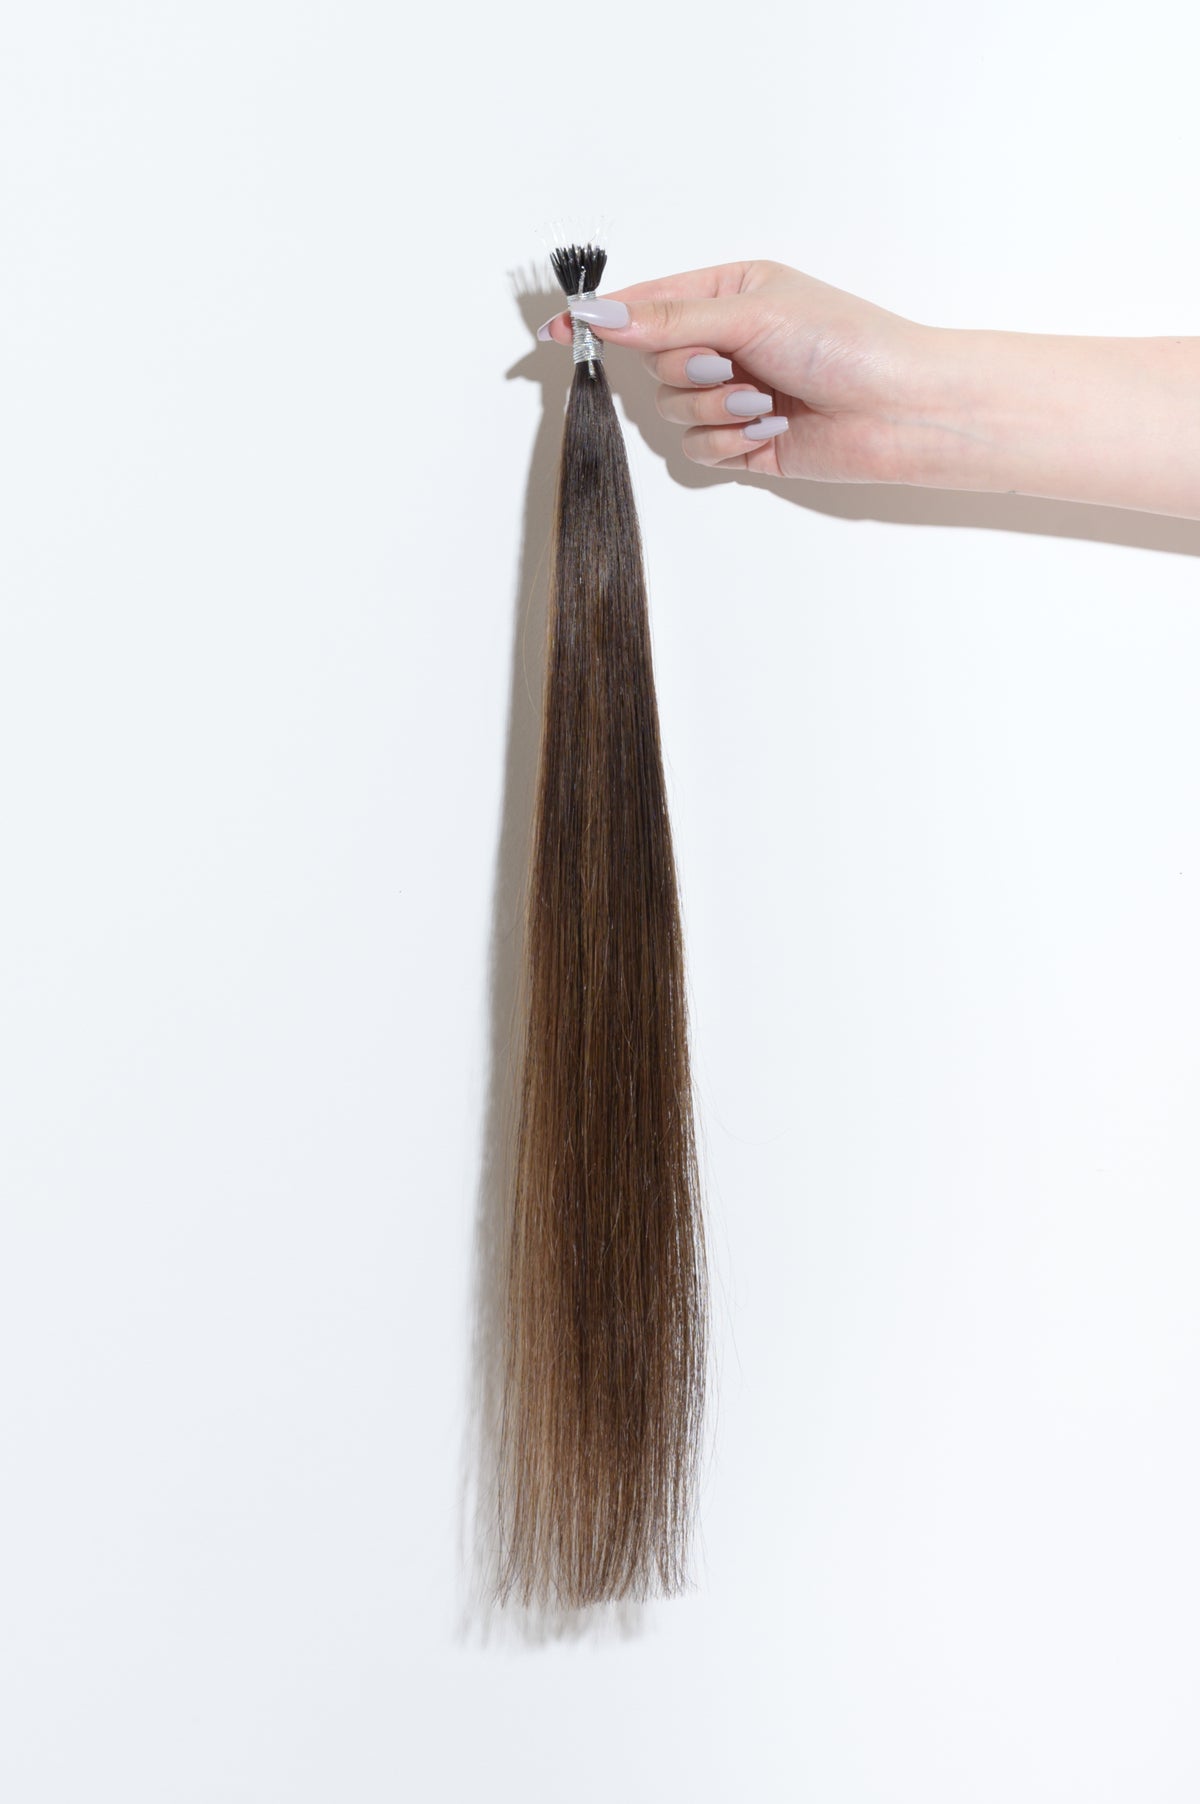 #Dark Brown Balayage Nano Tip Hair Extensions